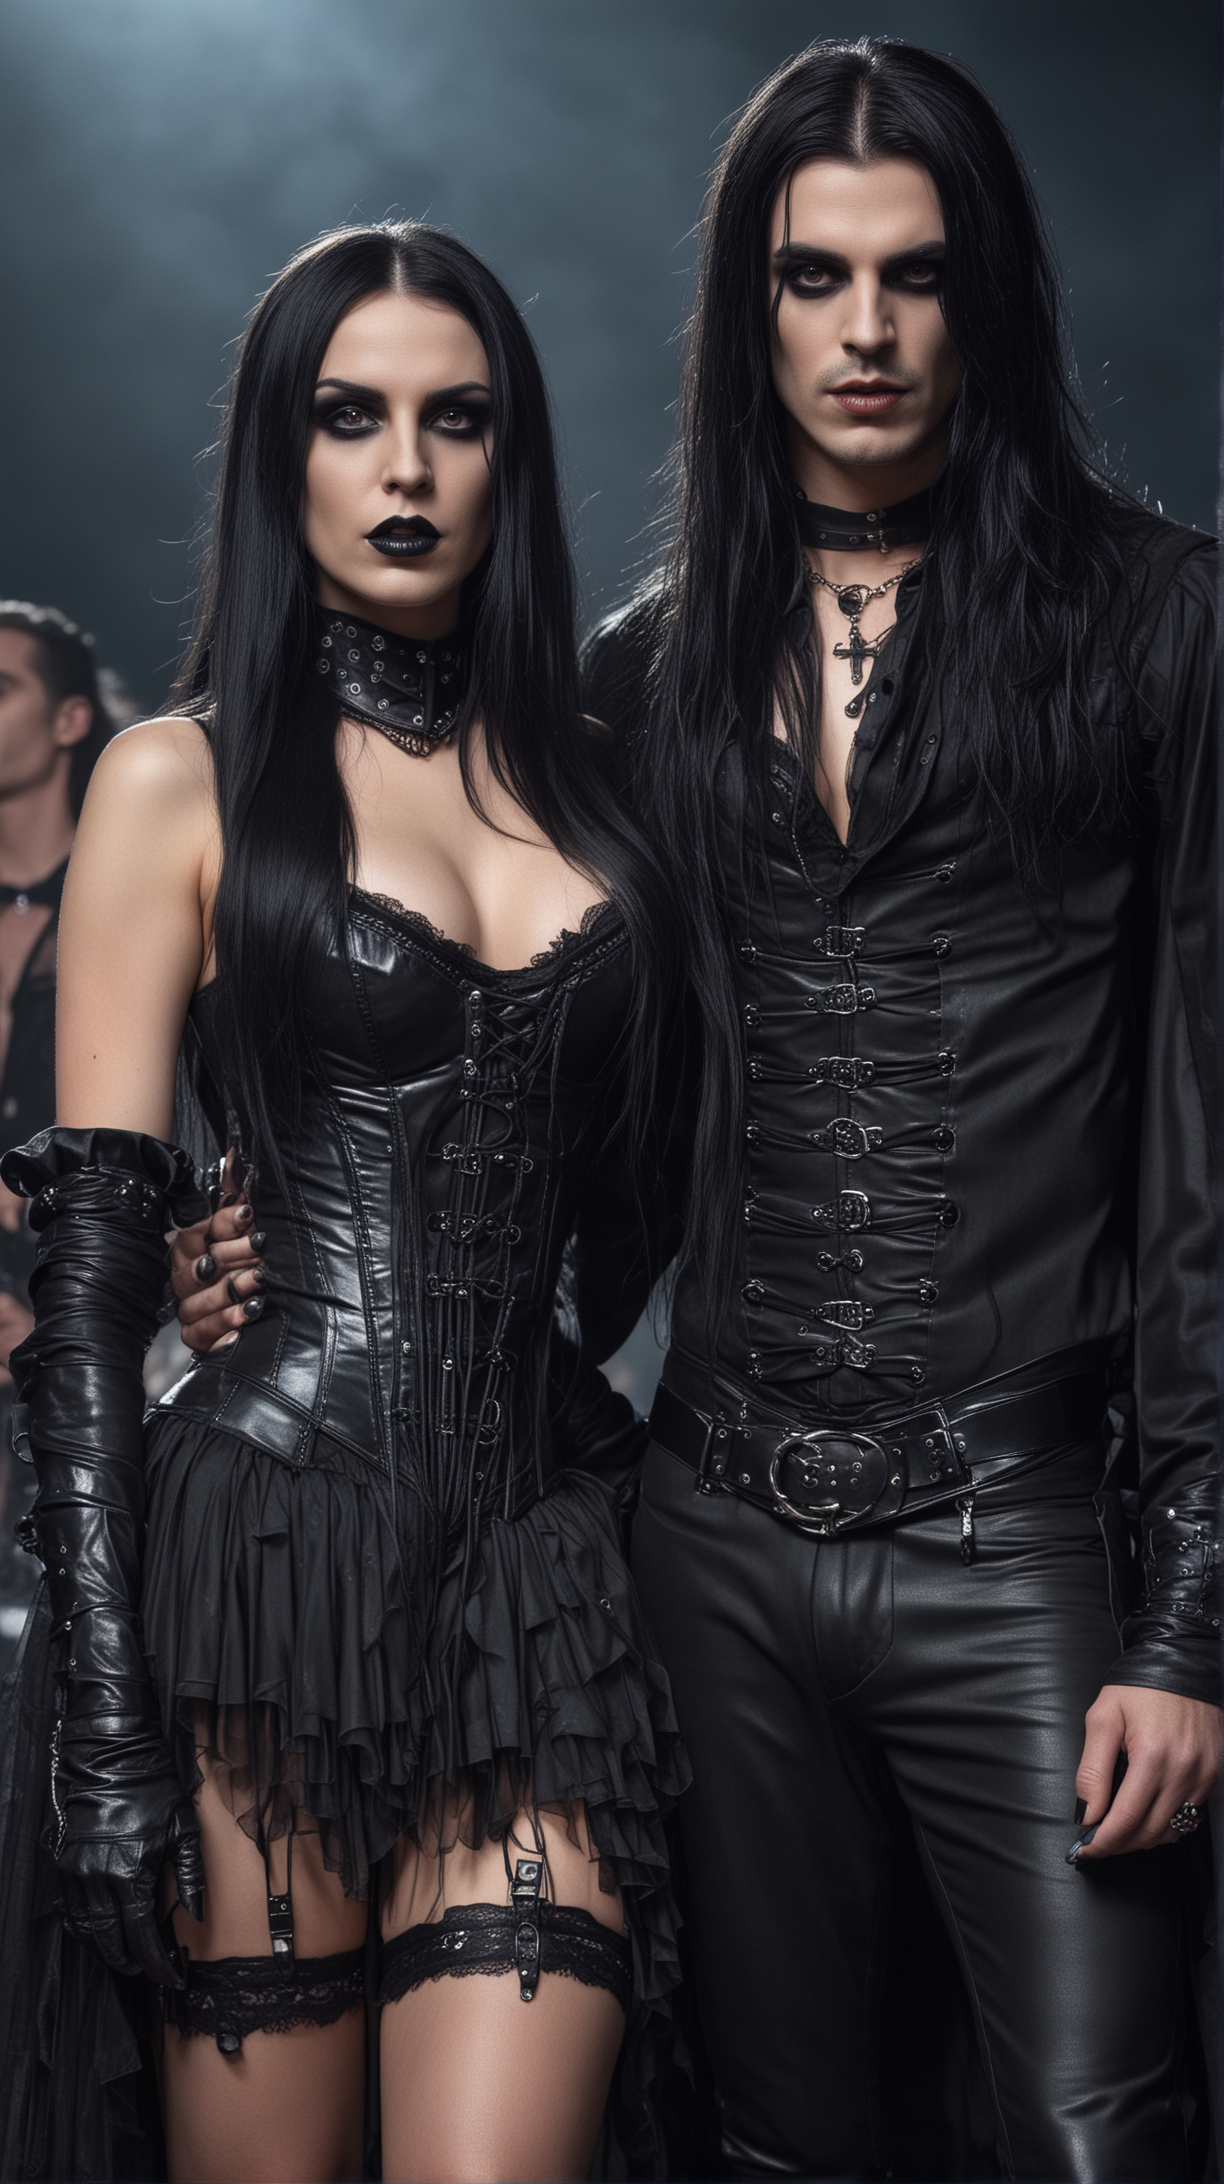 gothic man and woman, Long black hair, smokey eye make up, long black nails, latex corset, they are at a rock festival at night, vampire ispired look. 